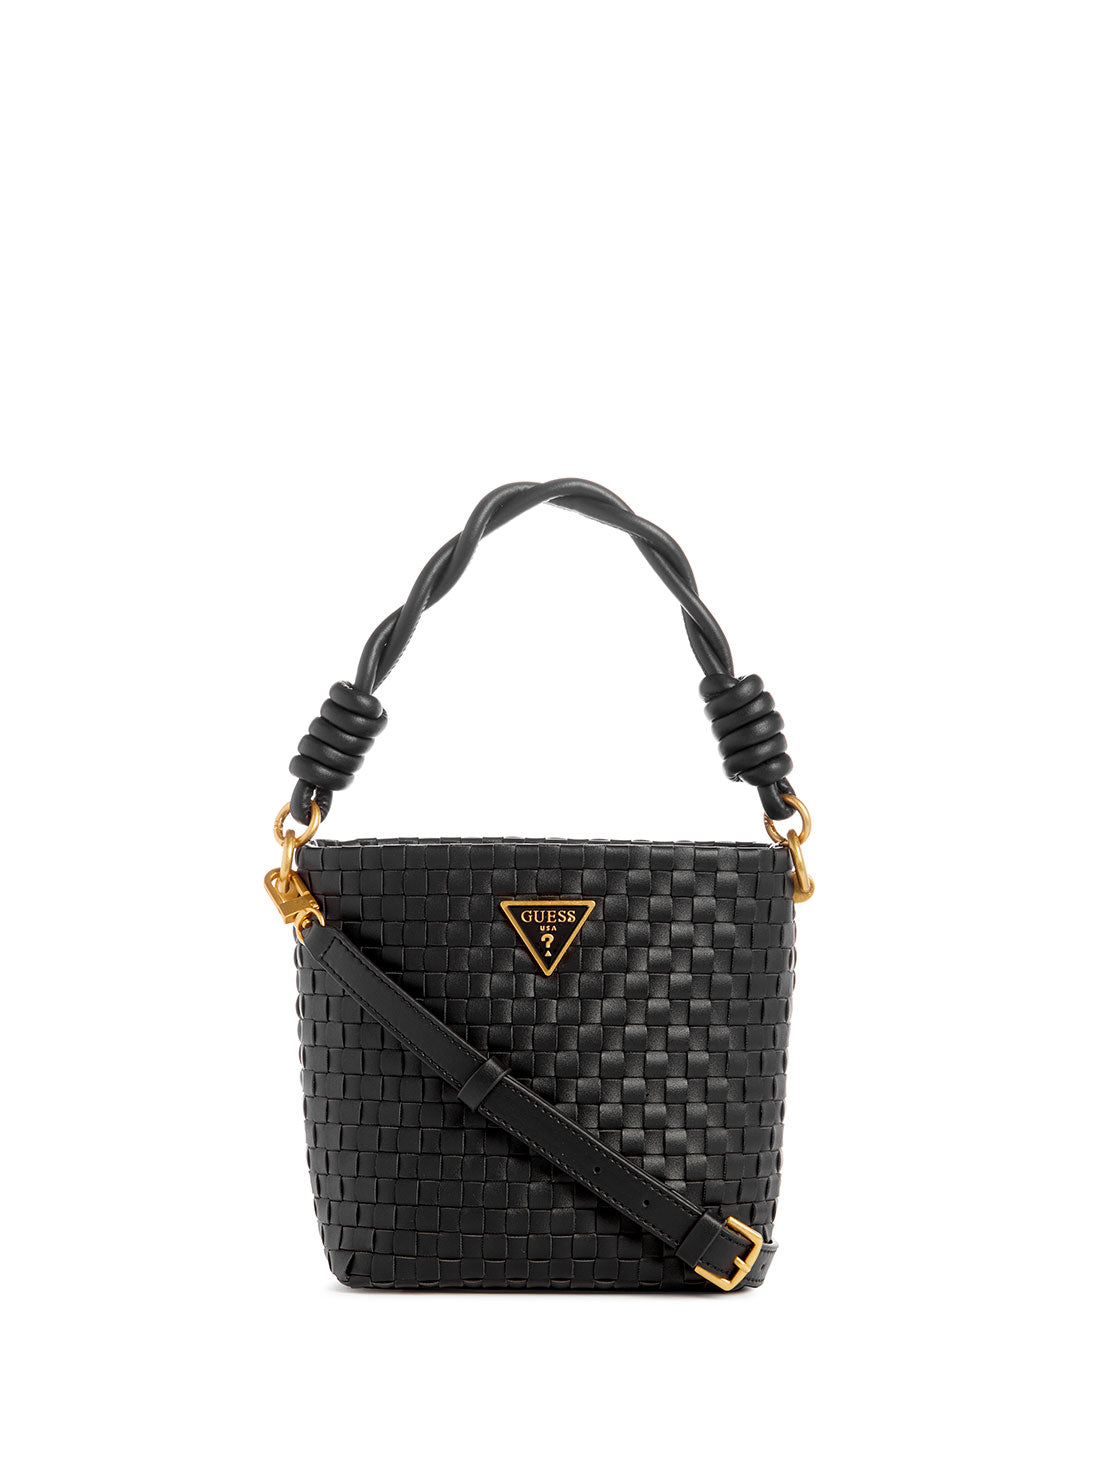 GUESS Women's Black Lisbet Bucket Bag WA877401 Front View